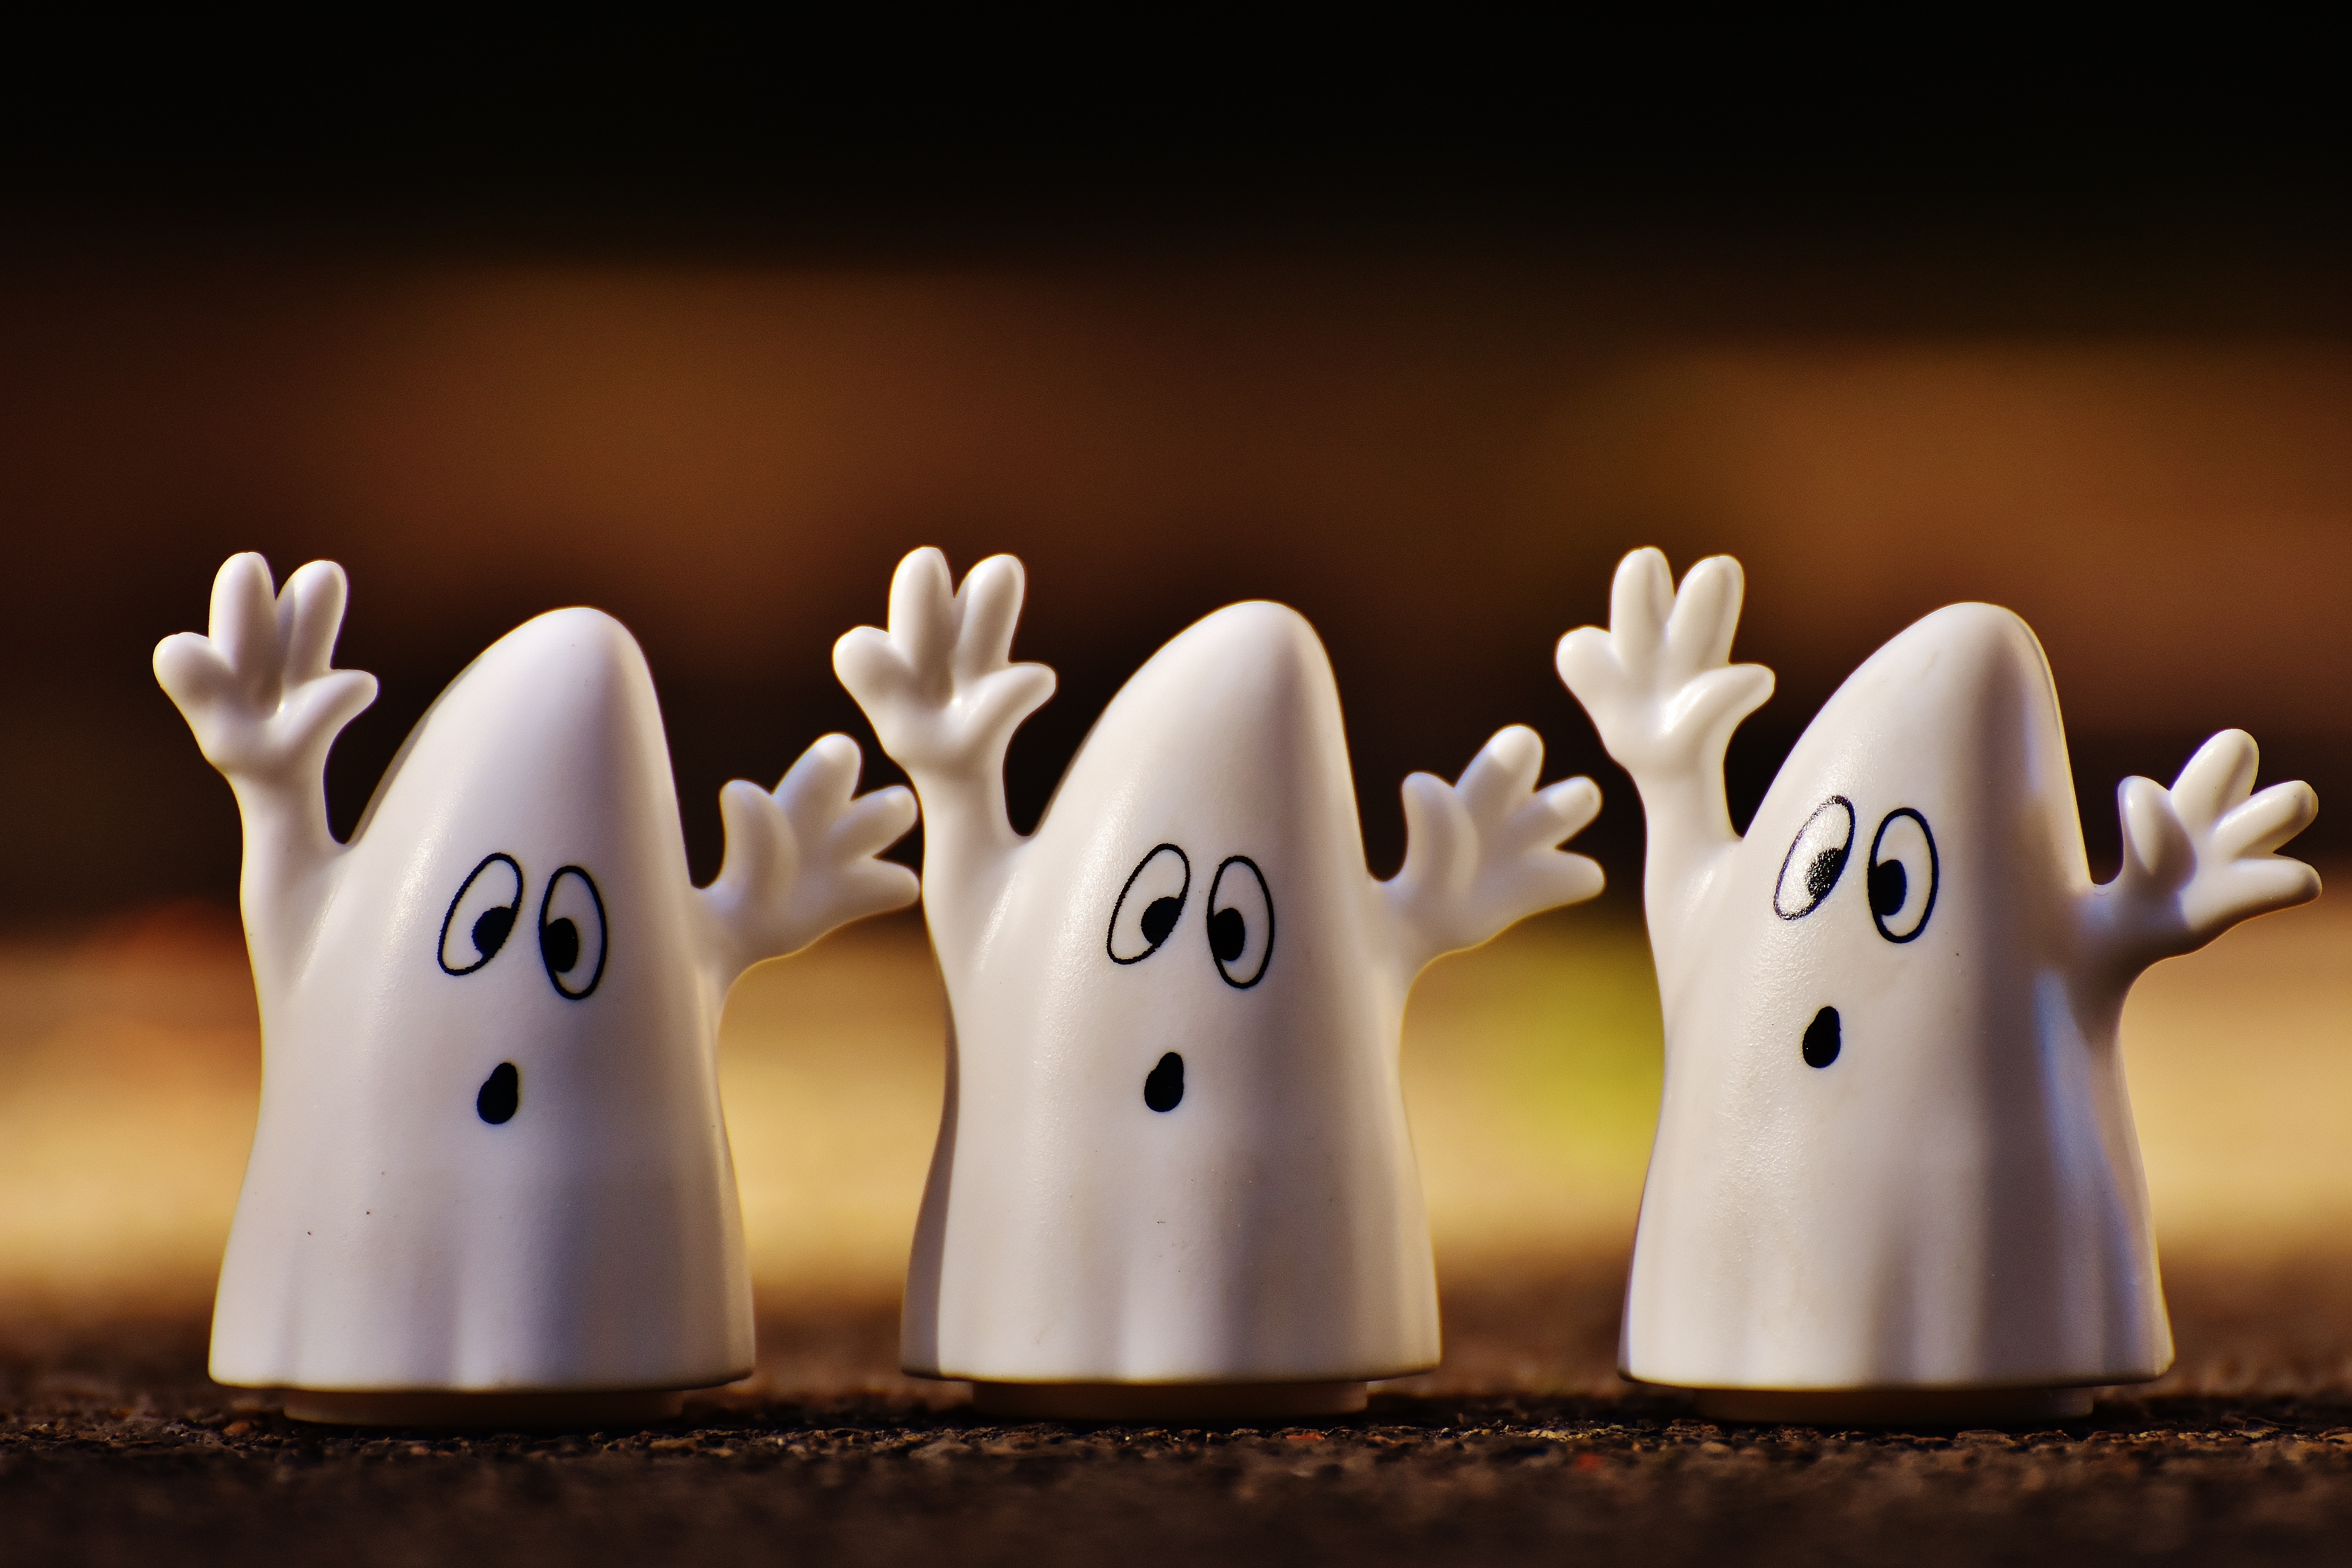 3 white ghost plastic figures